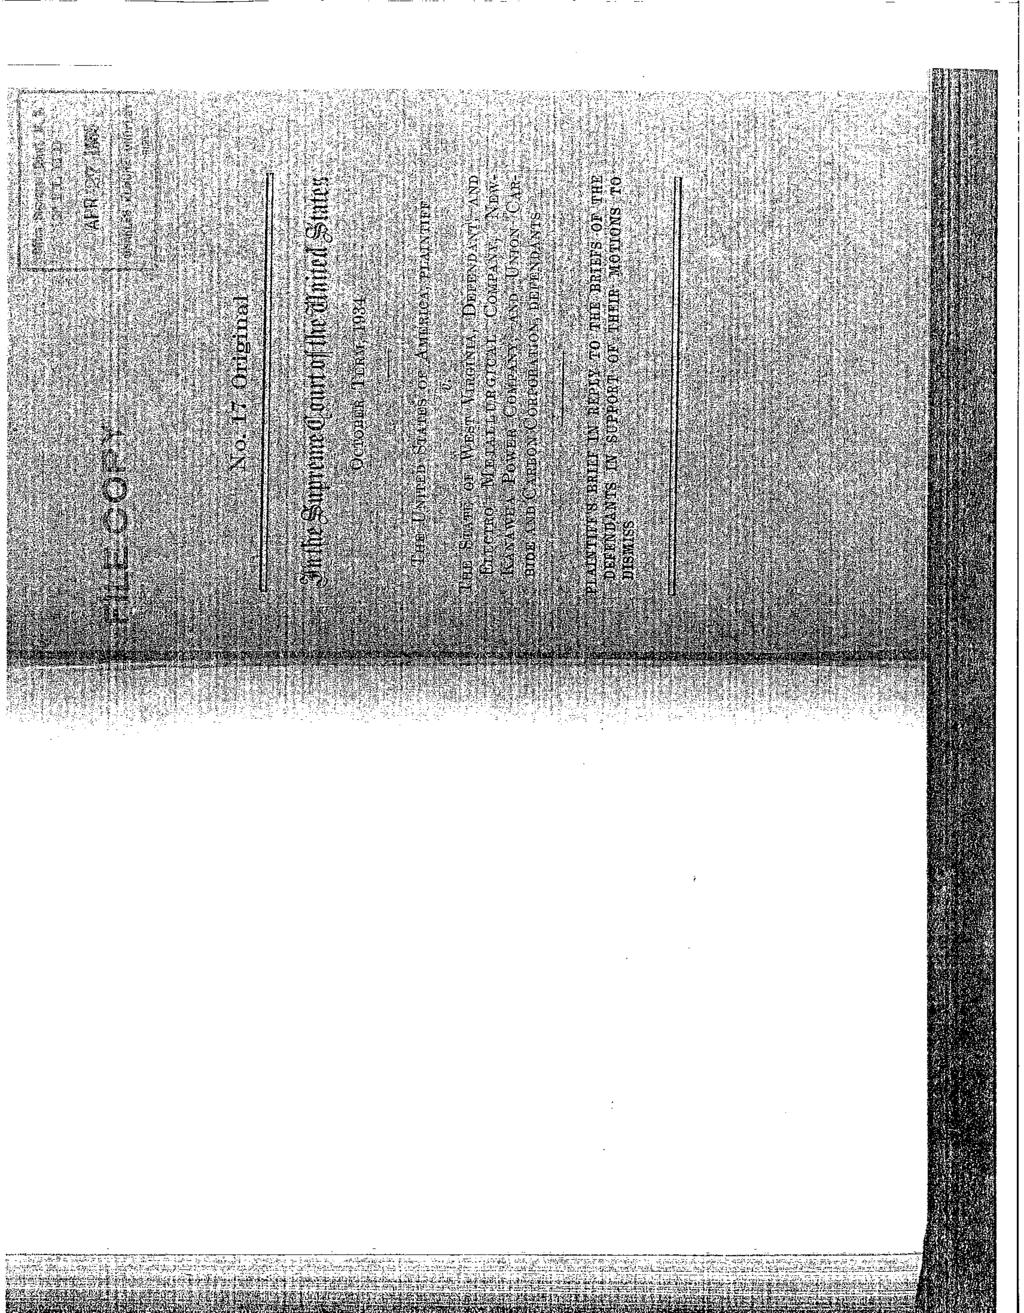 6:11-cv-00030-RAW Document 26-3